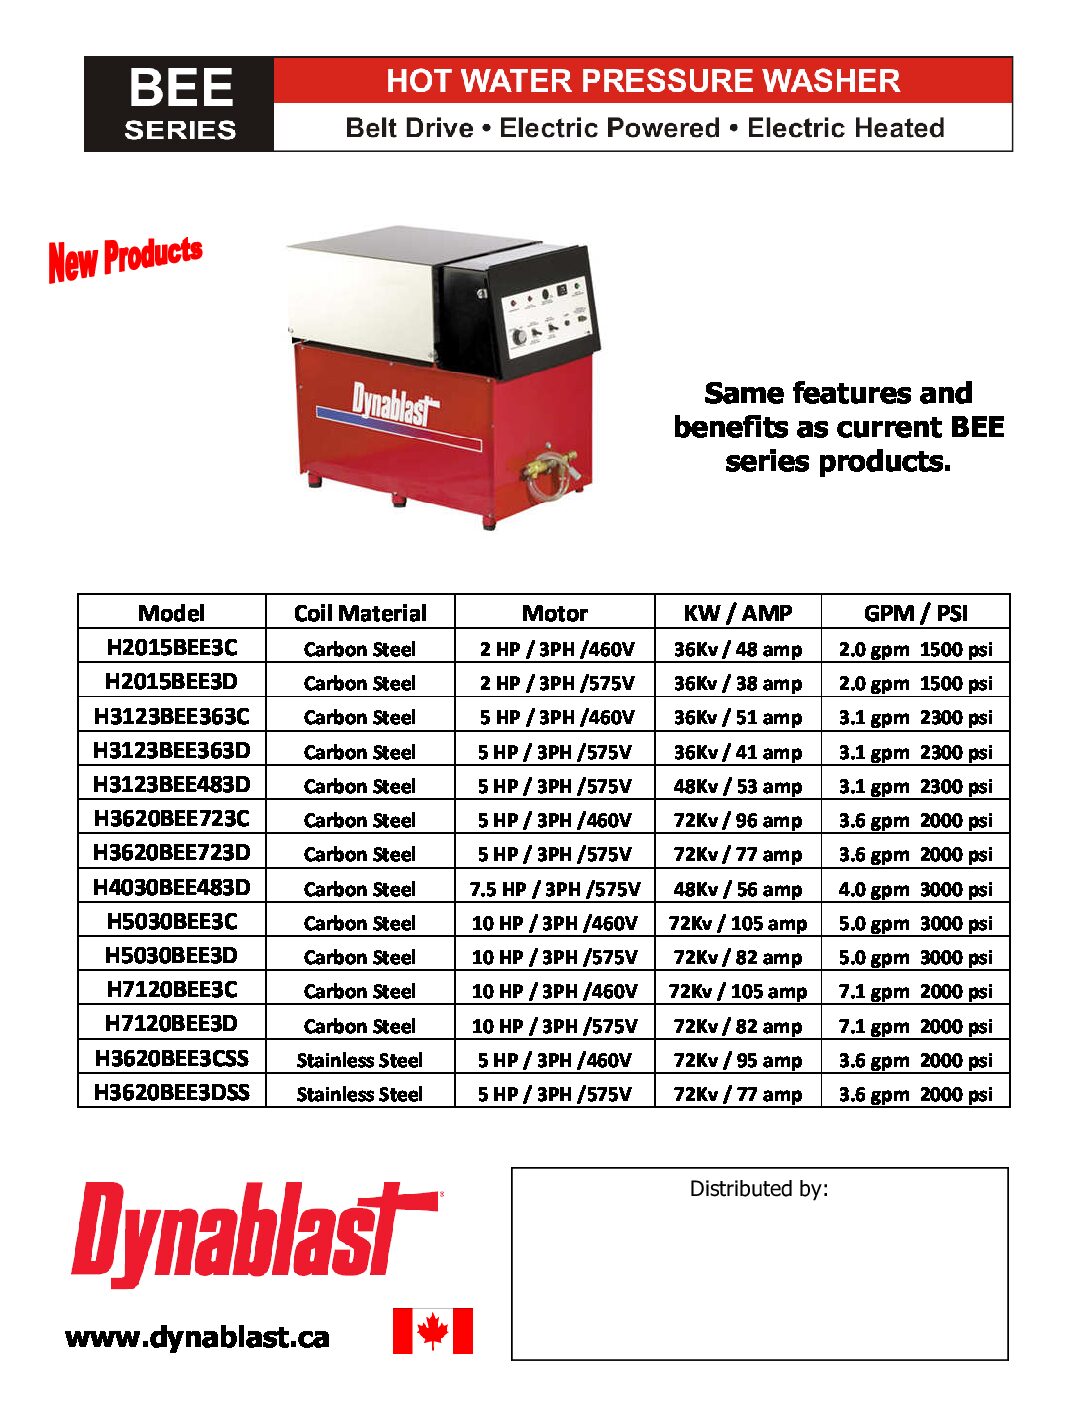 Dynablast H5030BEE3C/D Hot Water Pressure Washer